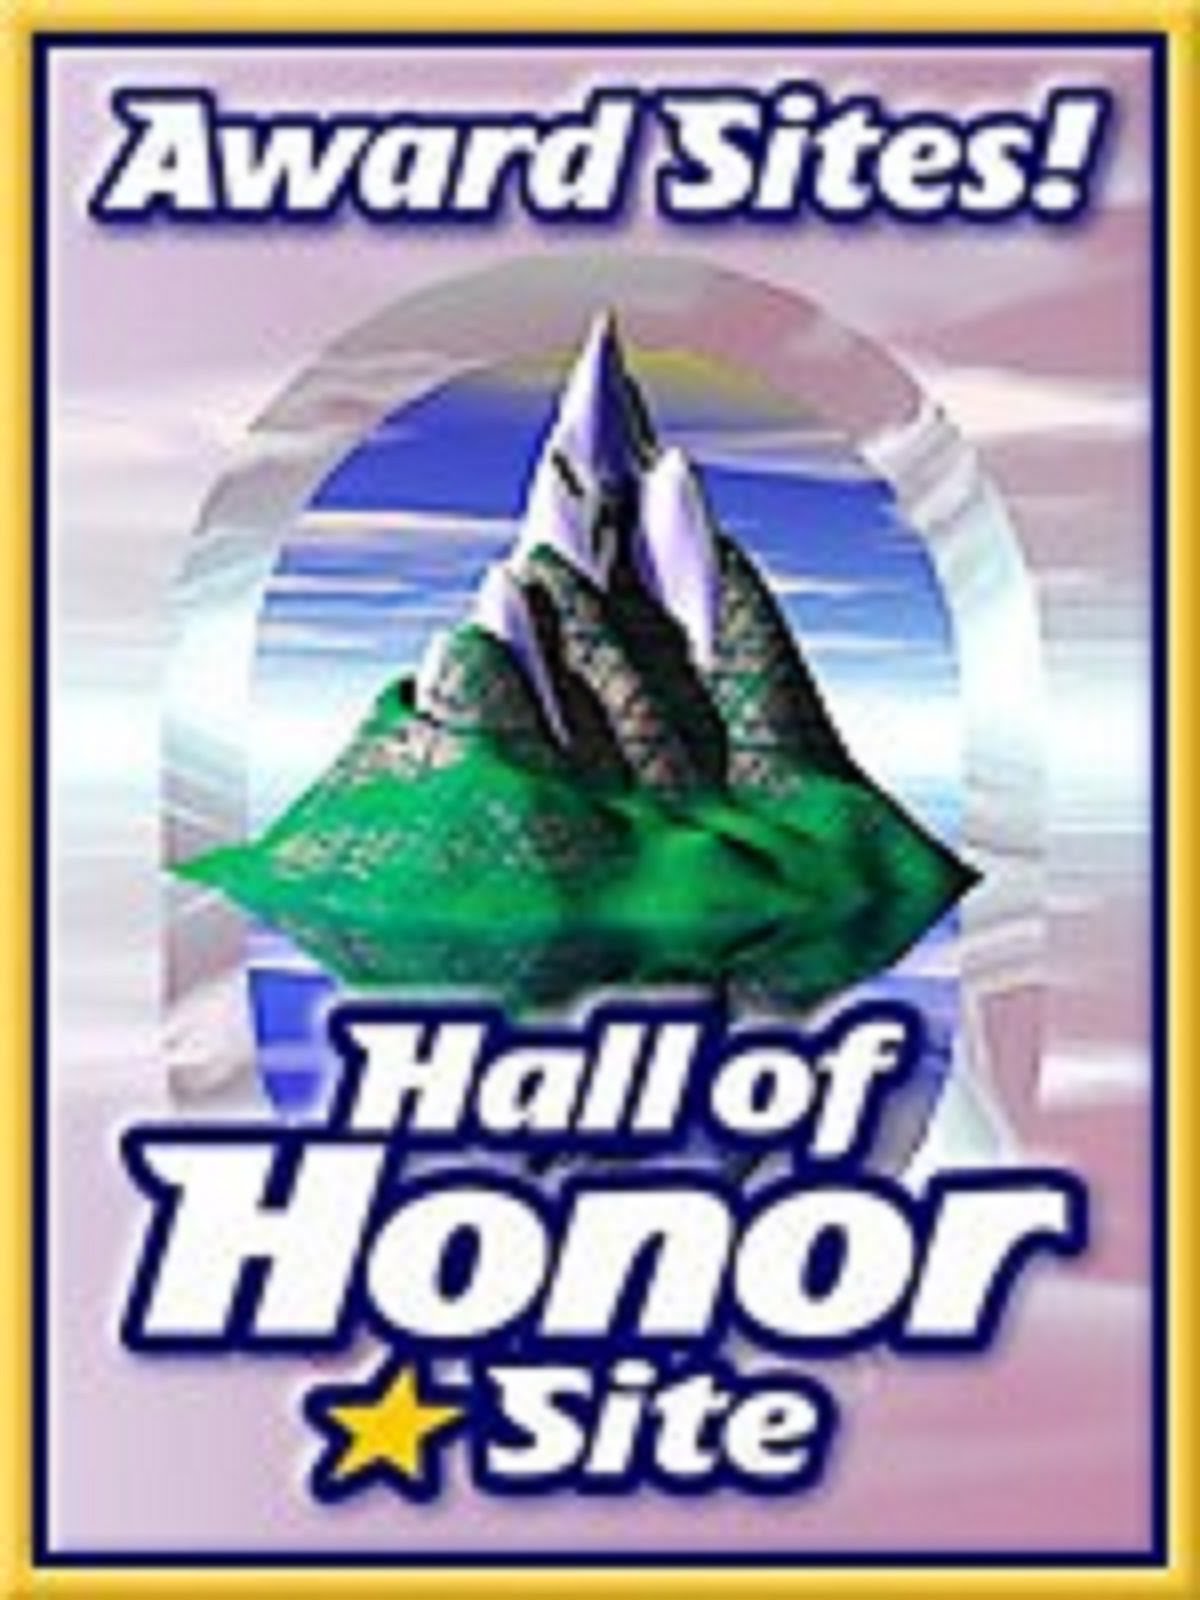 HALL OF HONOR - AWARD SITE